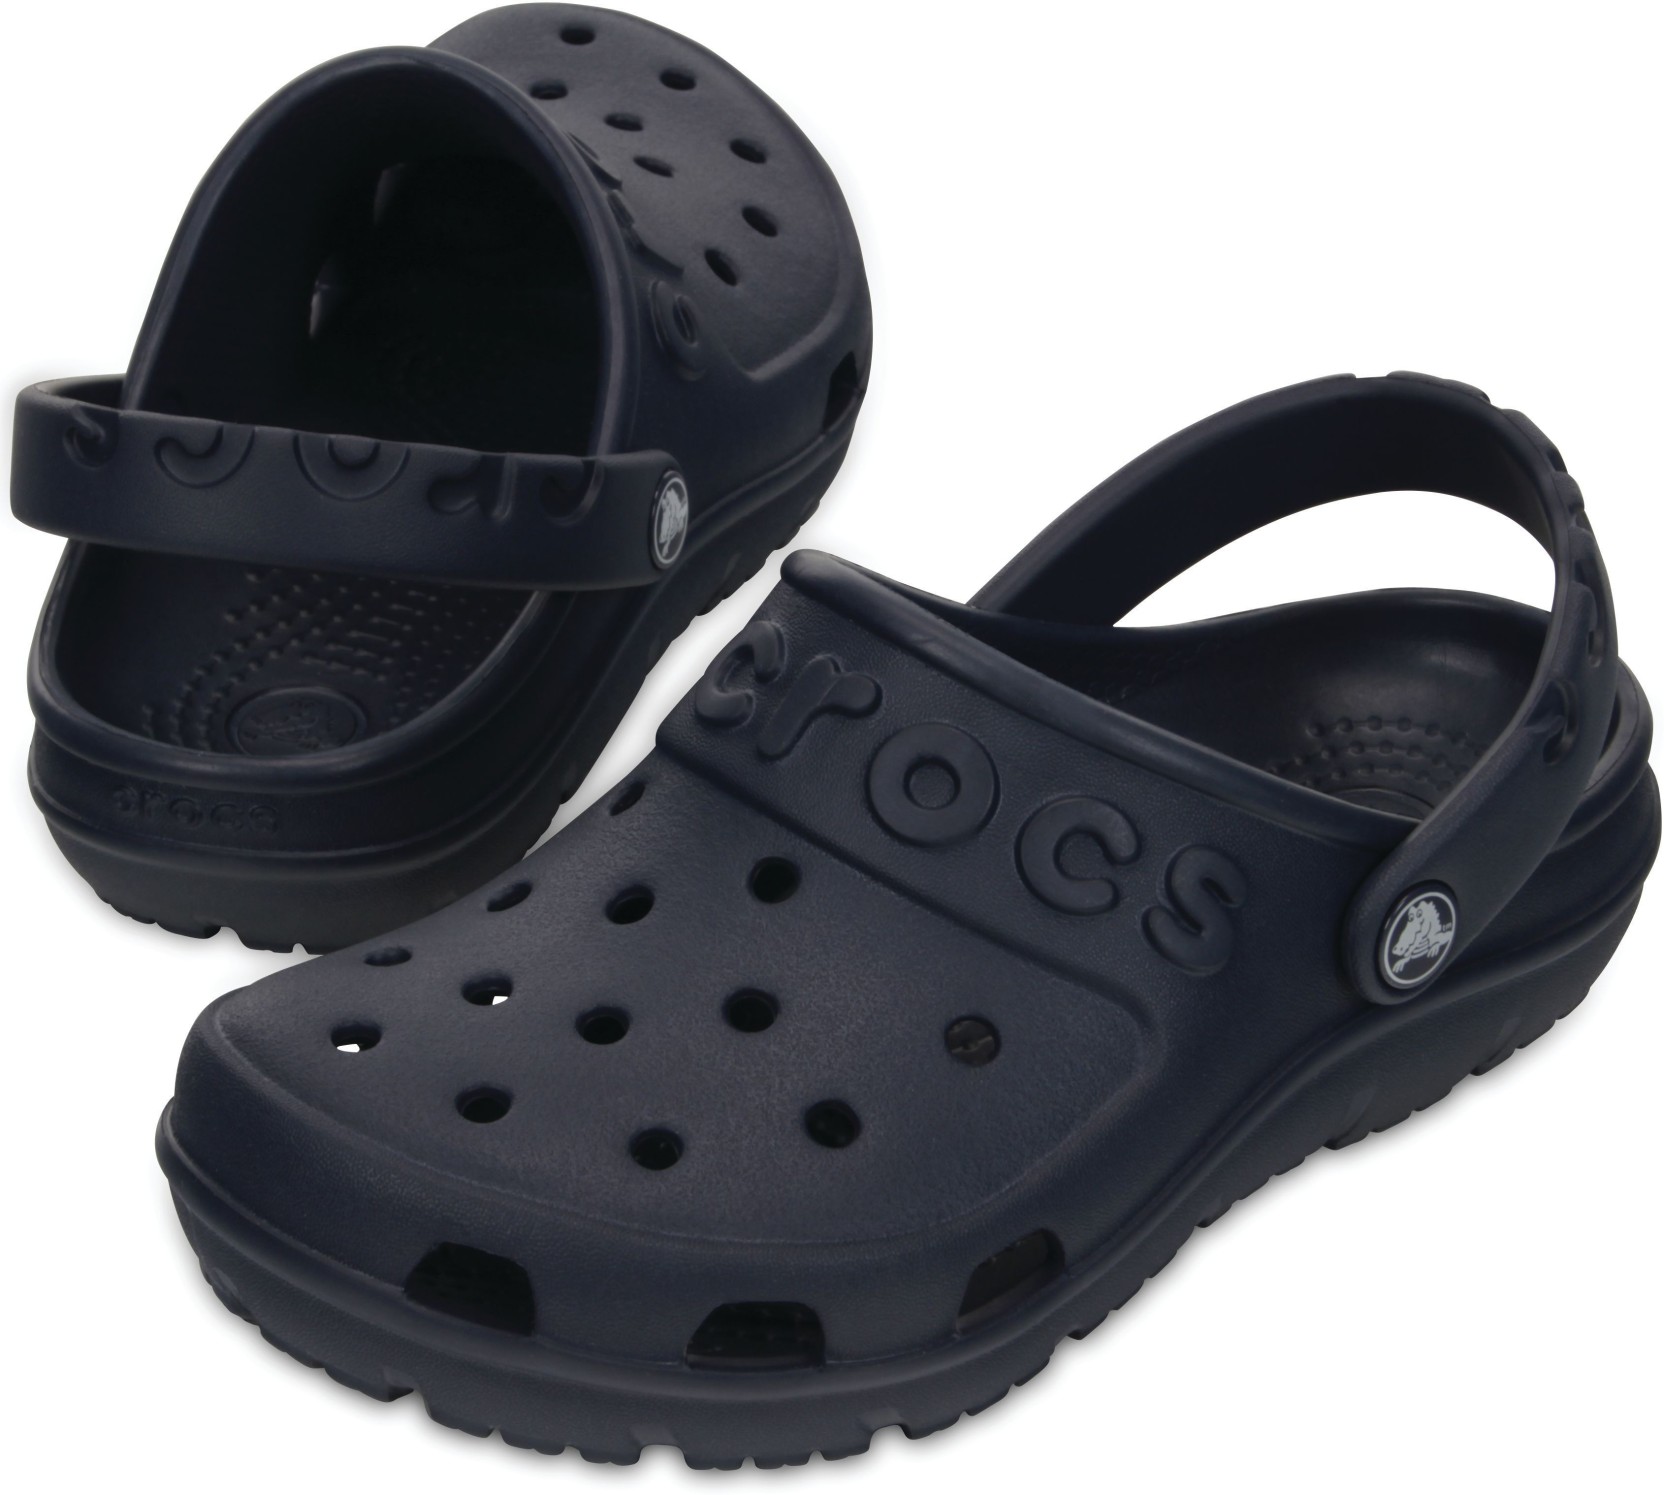 Crocs Boys Clogs Price in India - Buy Crocs Boys Clogs online at ...